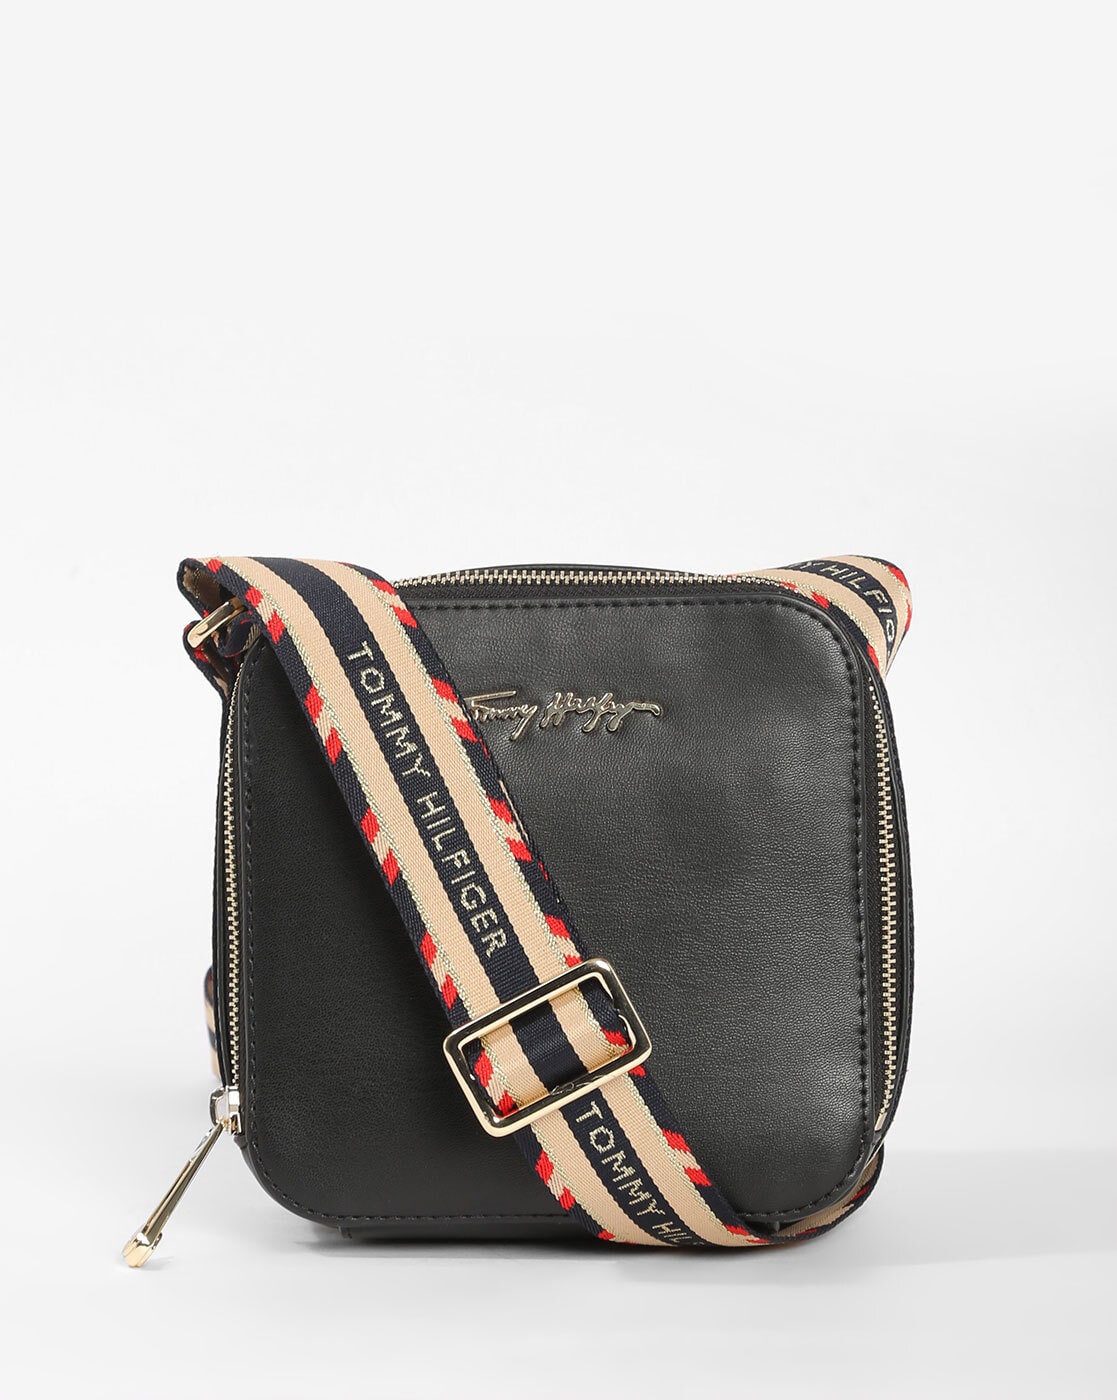 Tommy Hilfiger Purse Tote Shoulder Bag 2 PC Set Coin Pouch Black White for  sale online | eBay